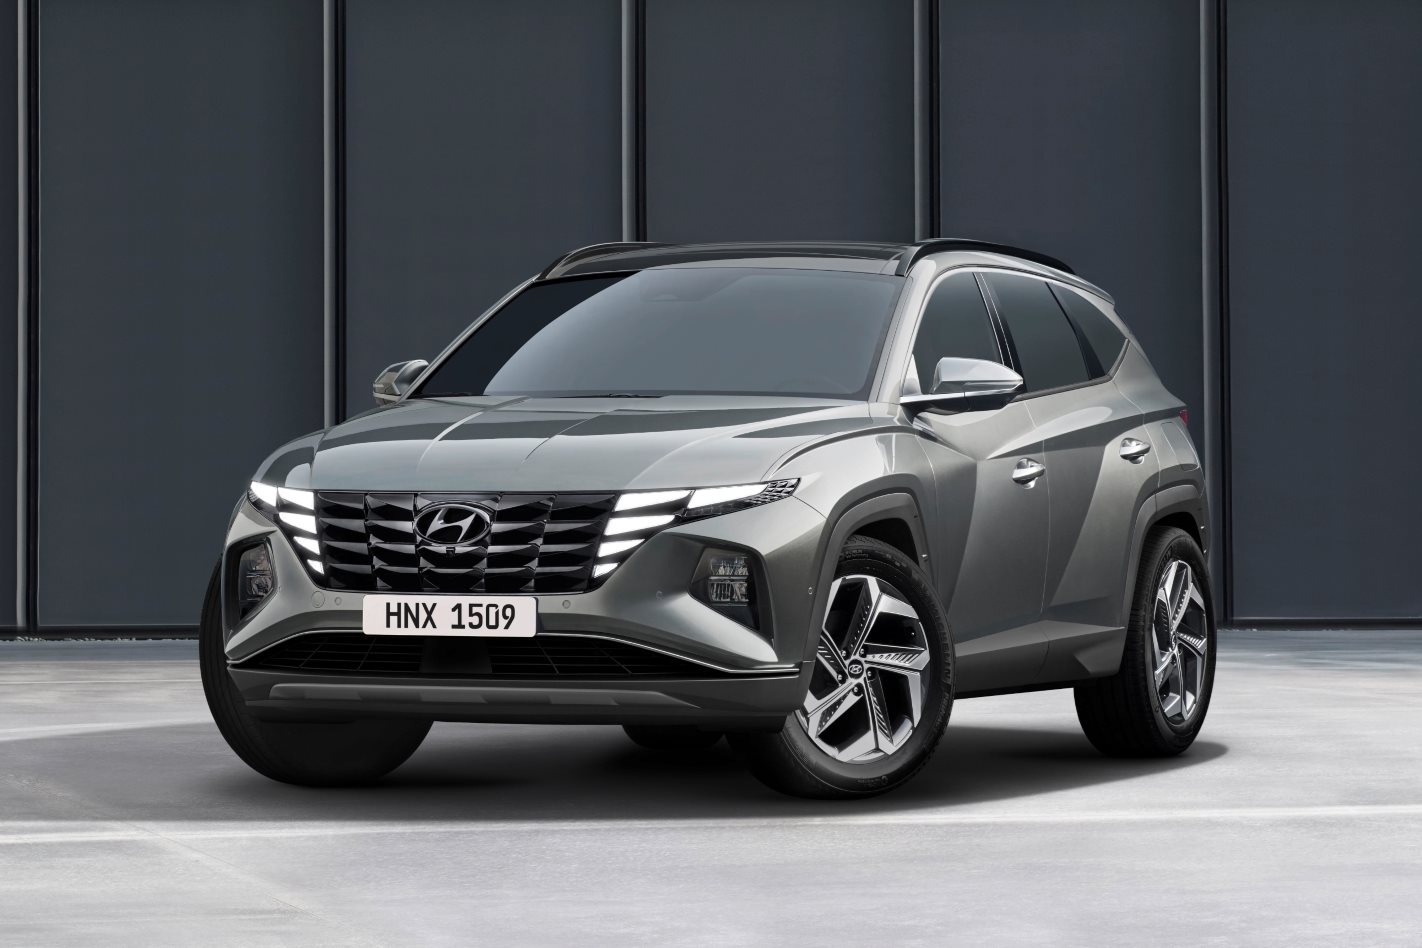 Hyundai Tucson Redesign 2021 Release Date